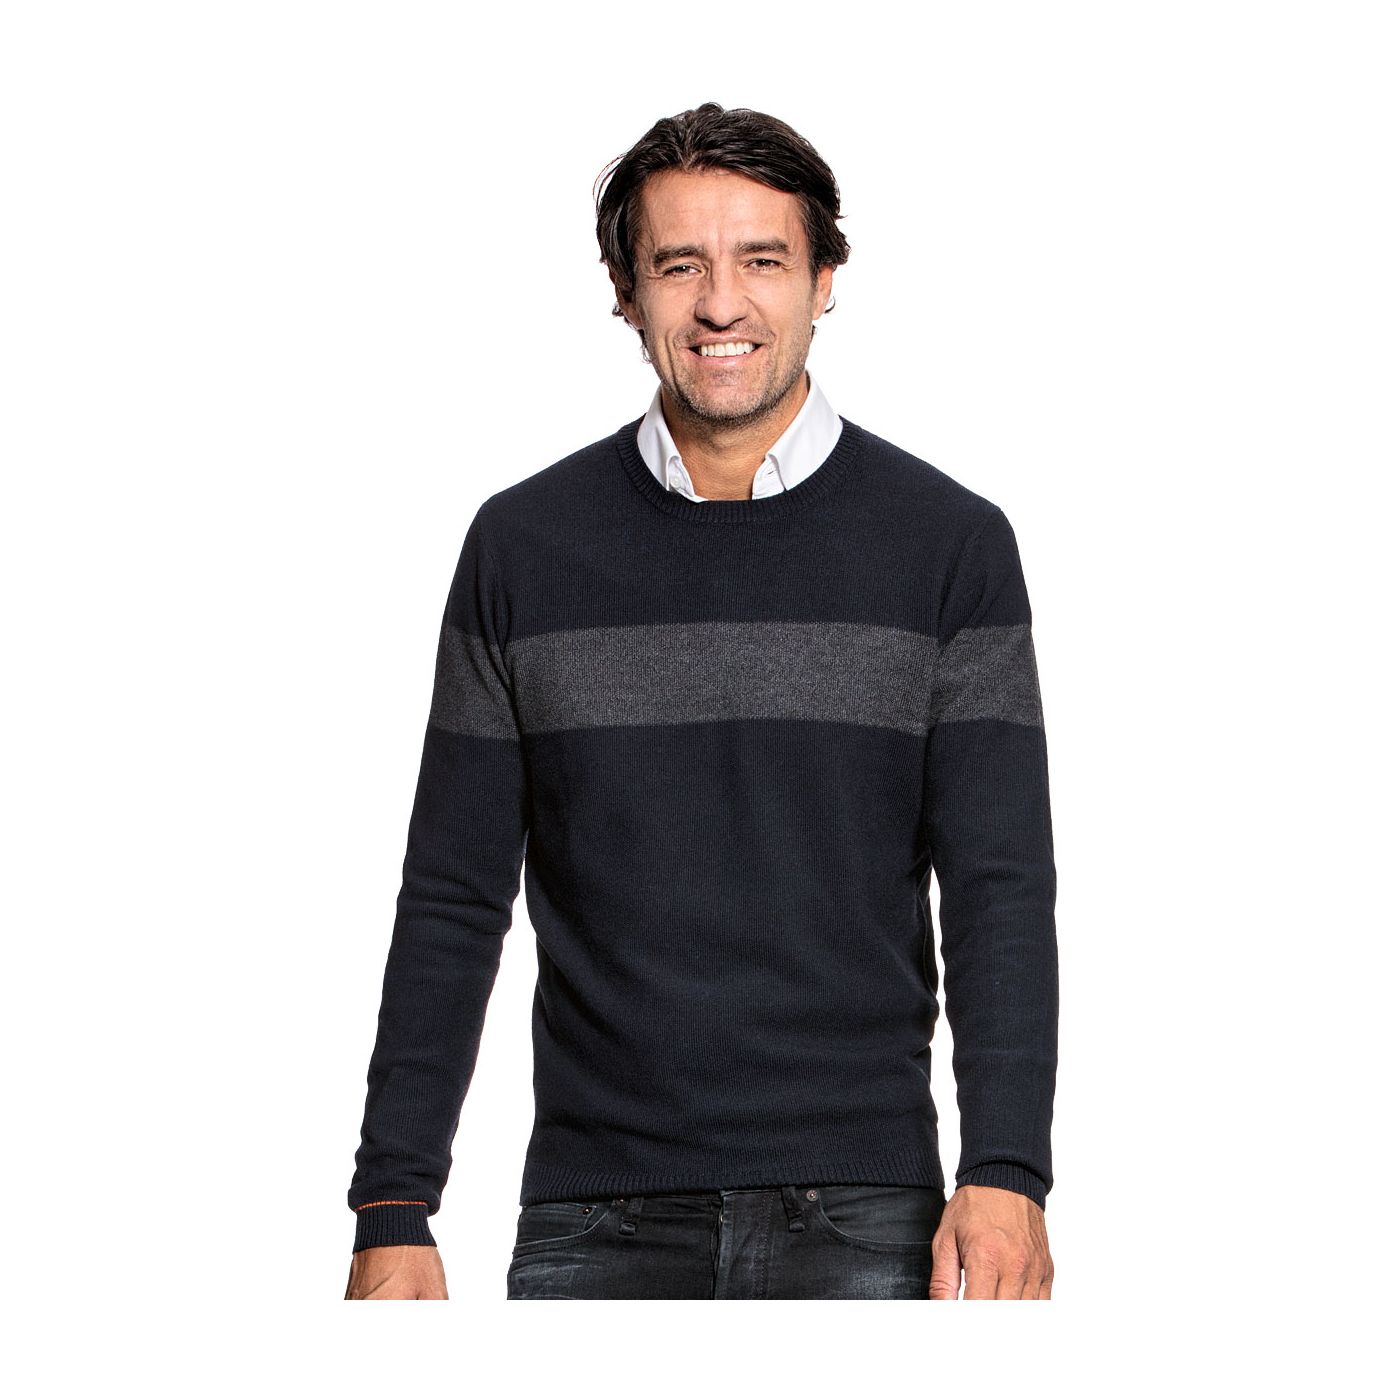 Honeycomb knit sweater for men made of Merino wool in Dark blue